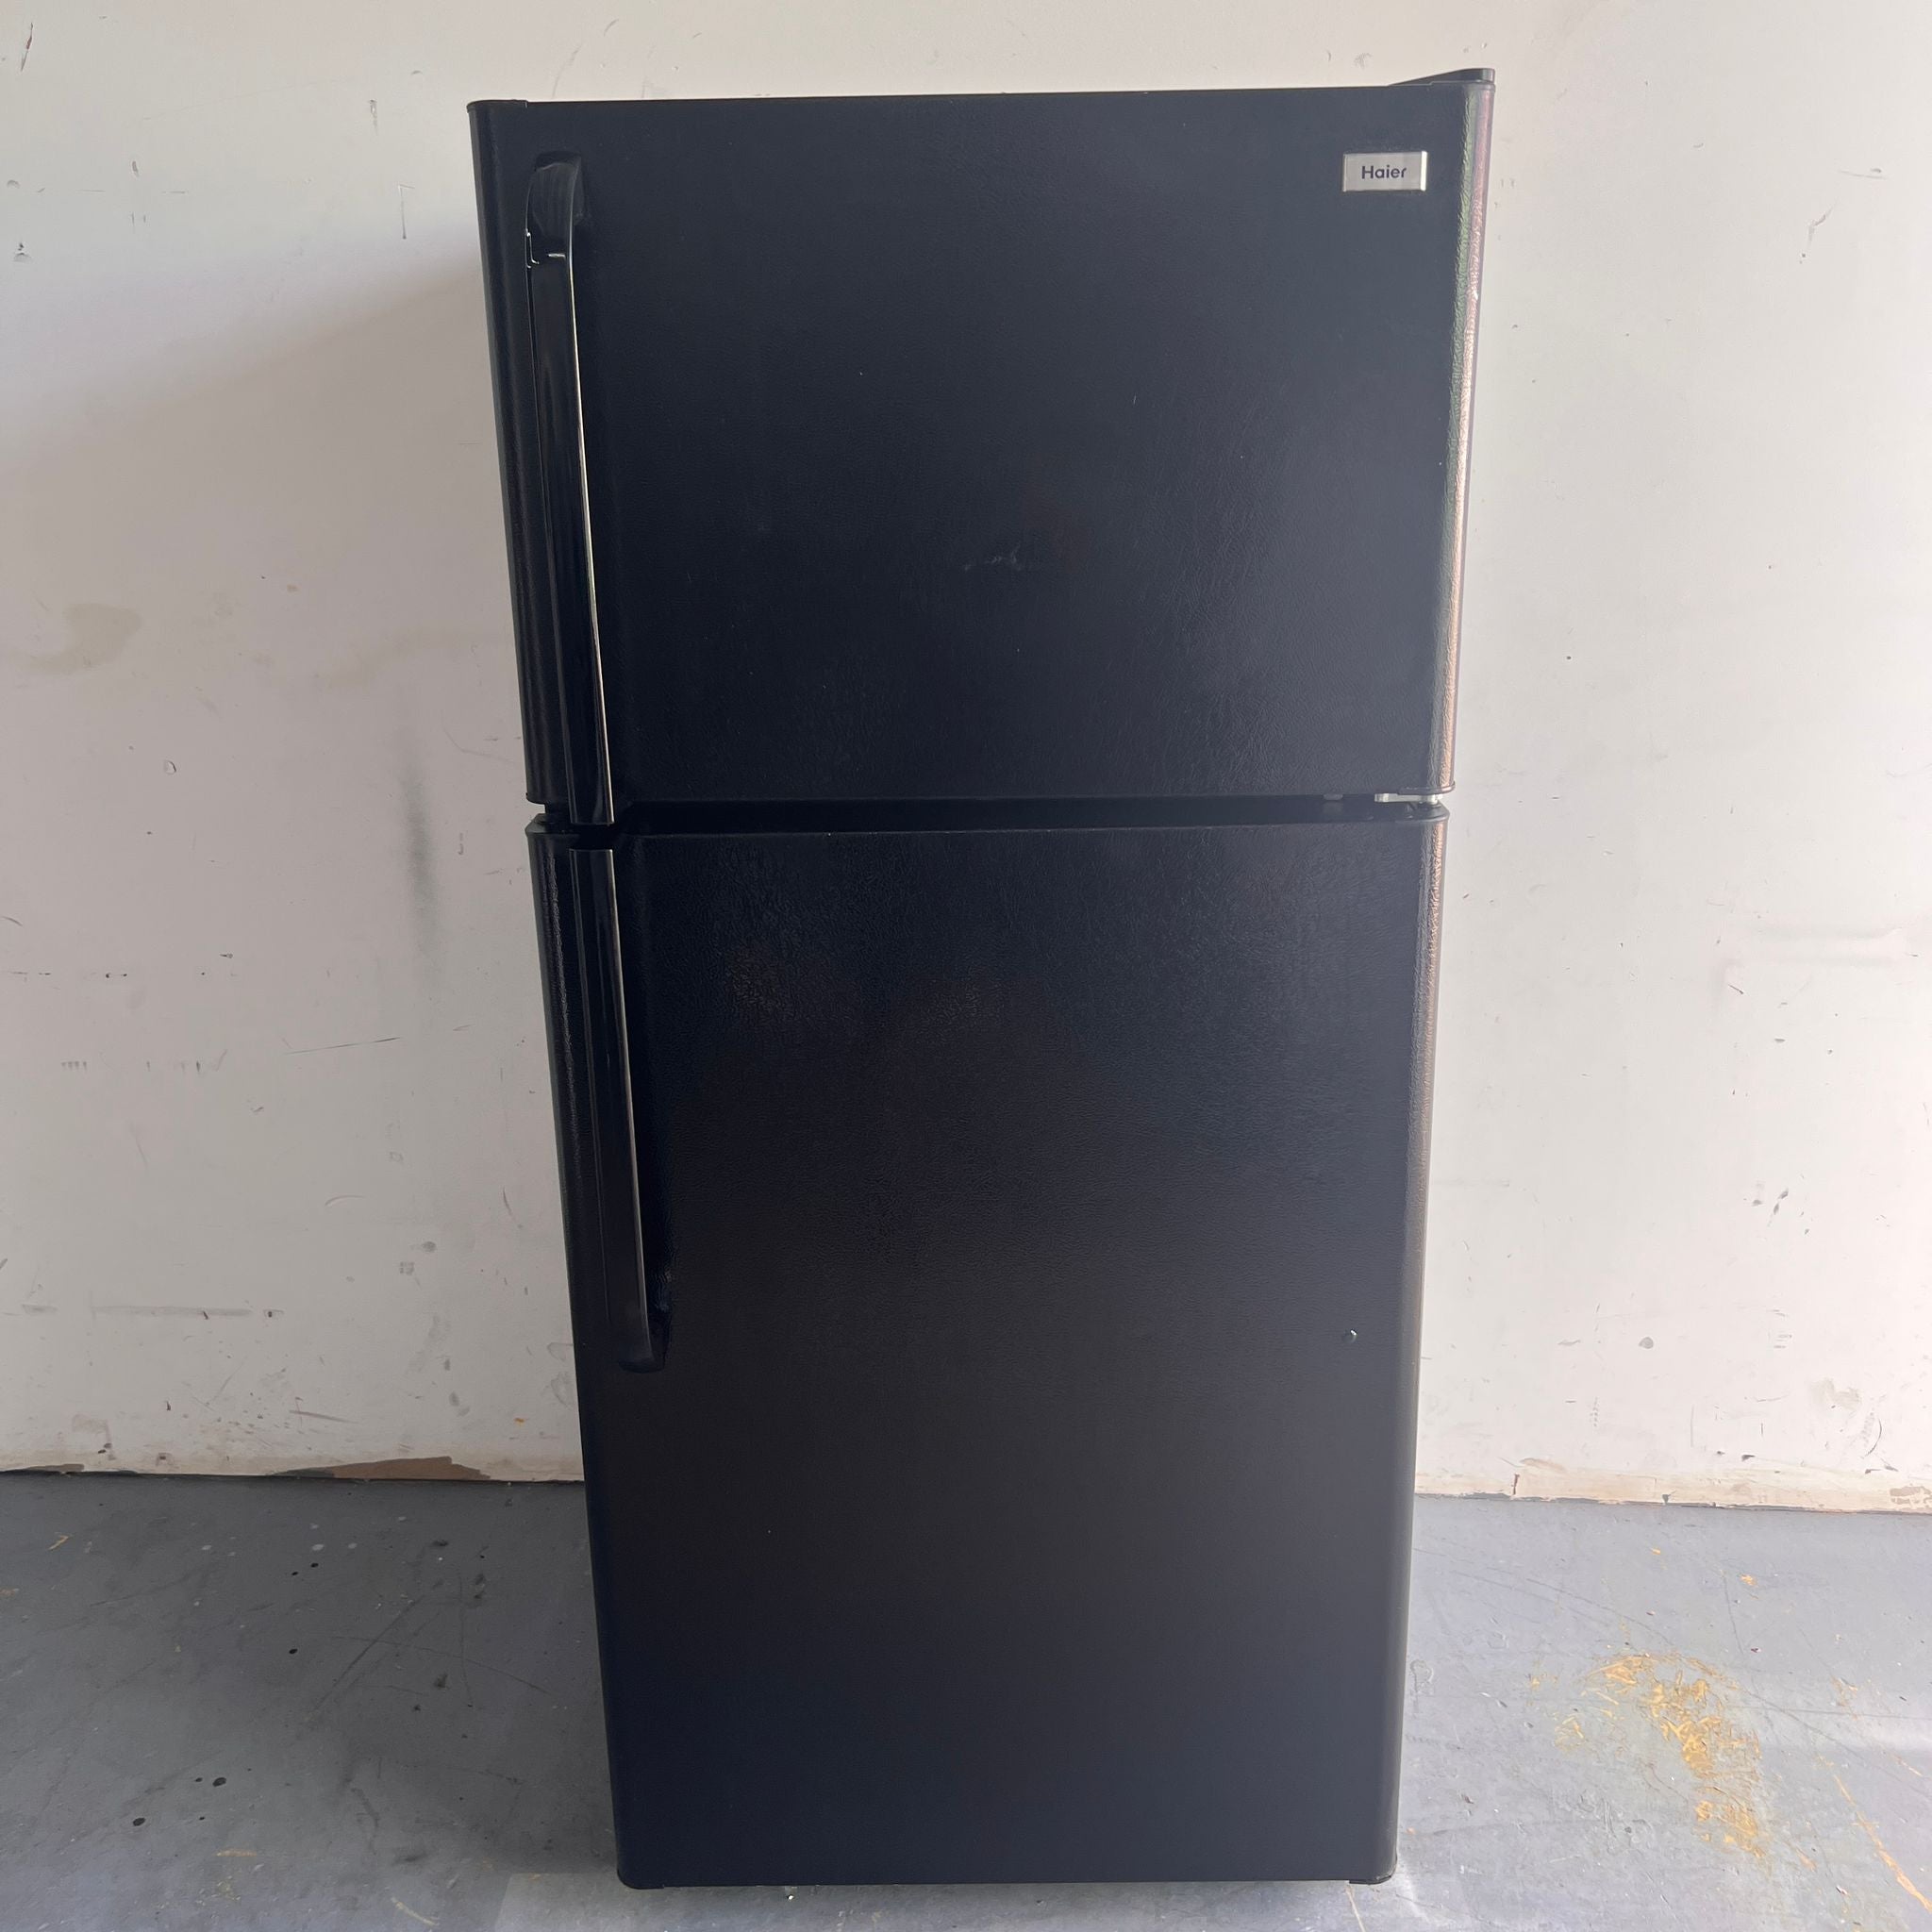 Haier-Black-Top-and-Bottom-Refrigerator